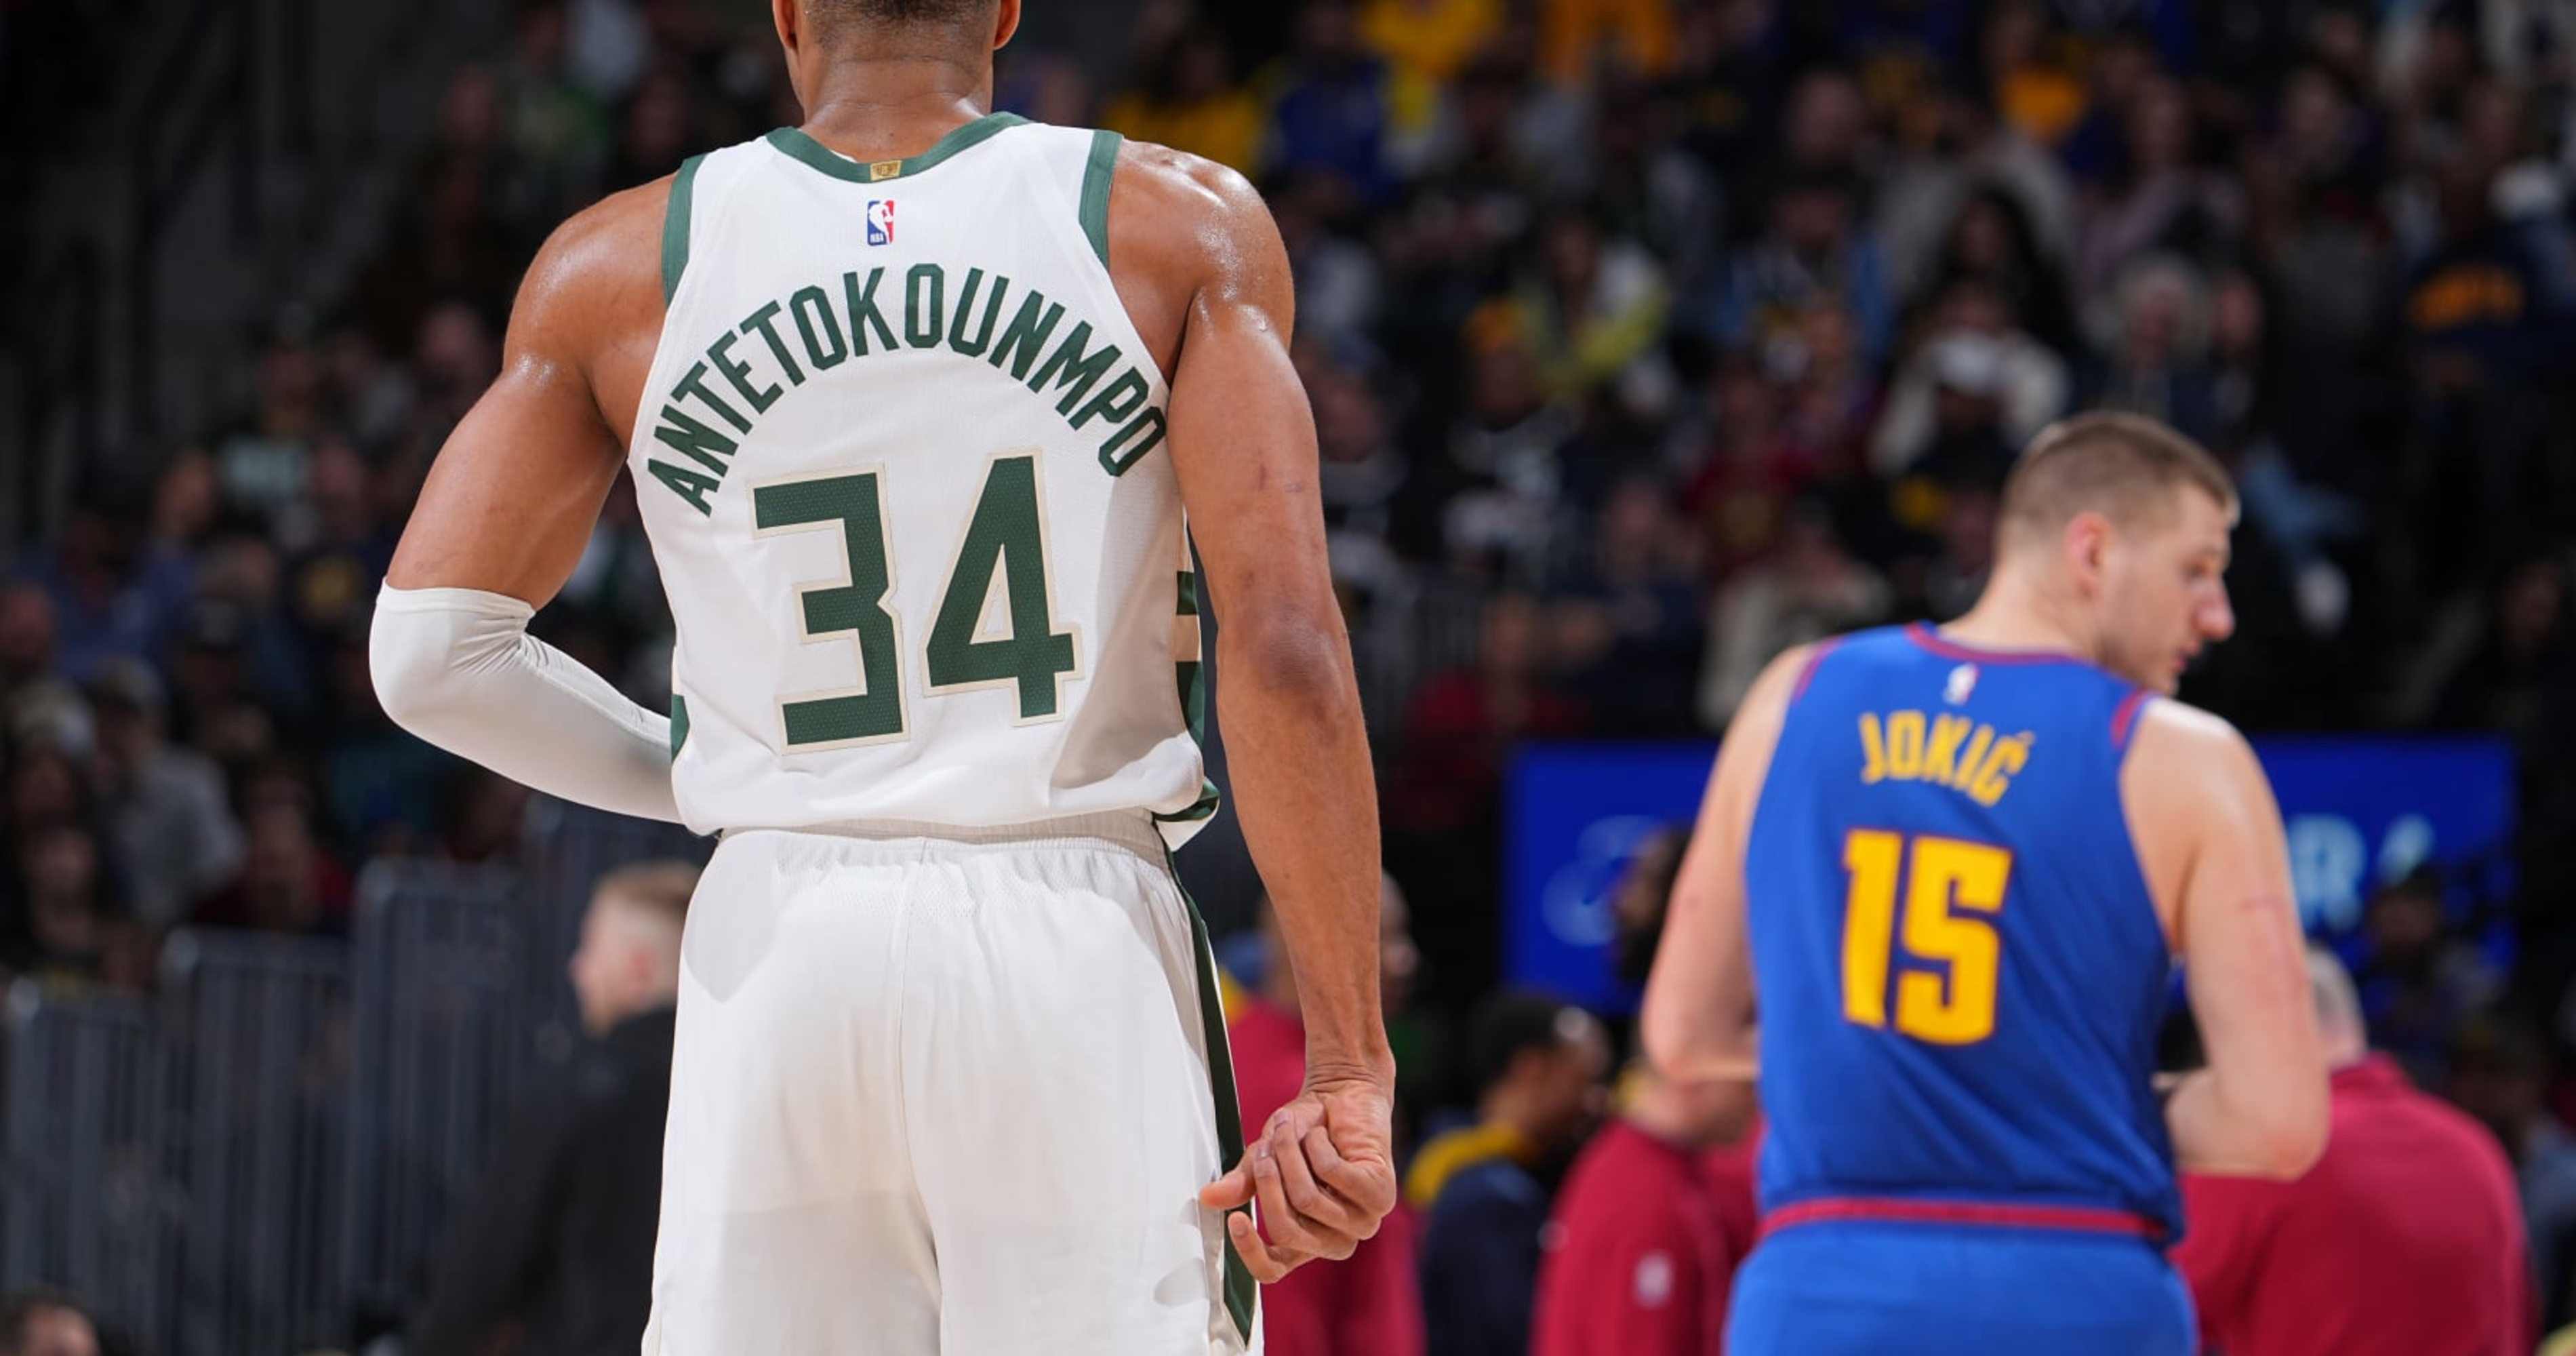 NBA most popular jerseys: Jayson Tatum fourth, Boston Celtics second in new  rankings 